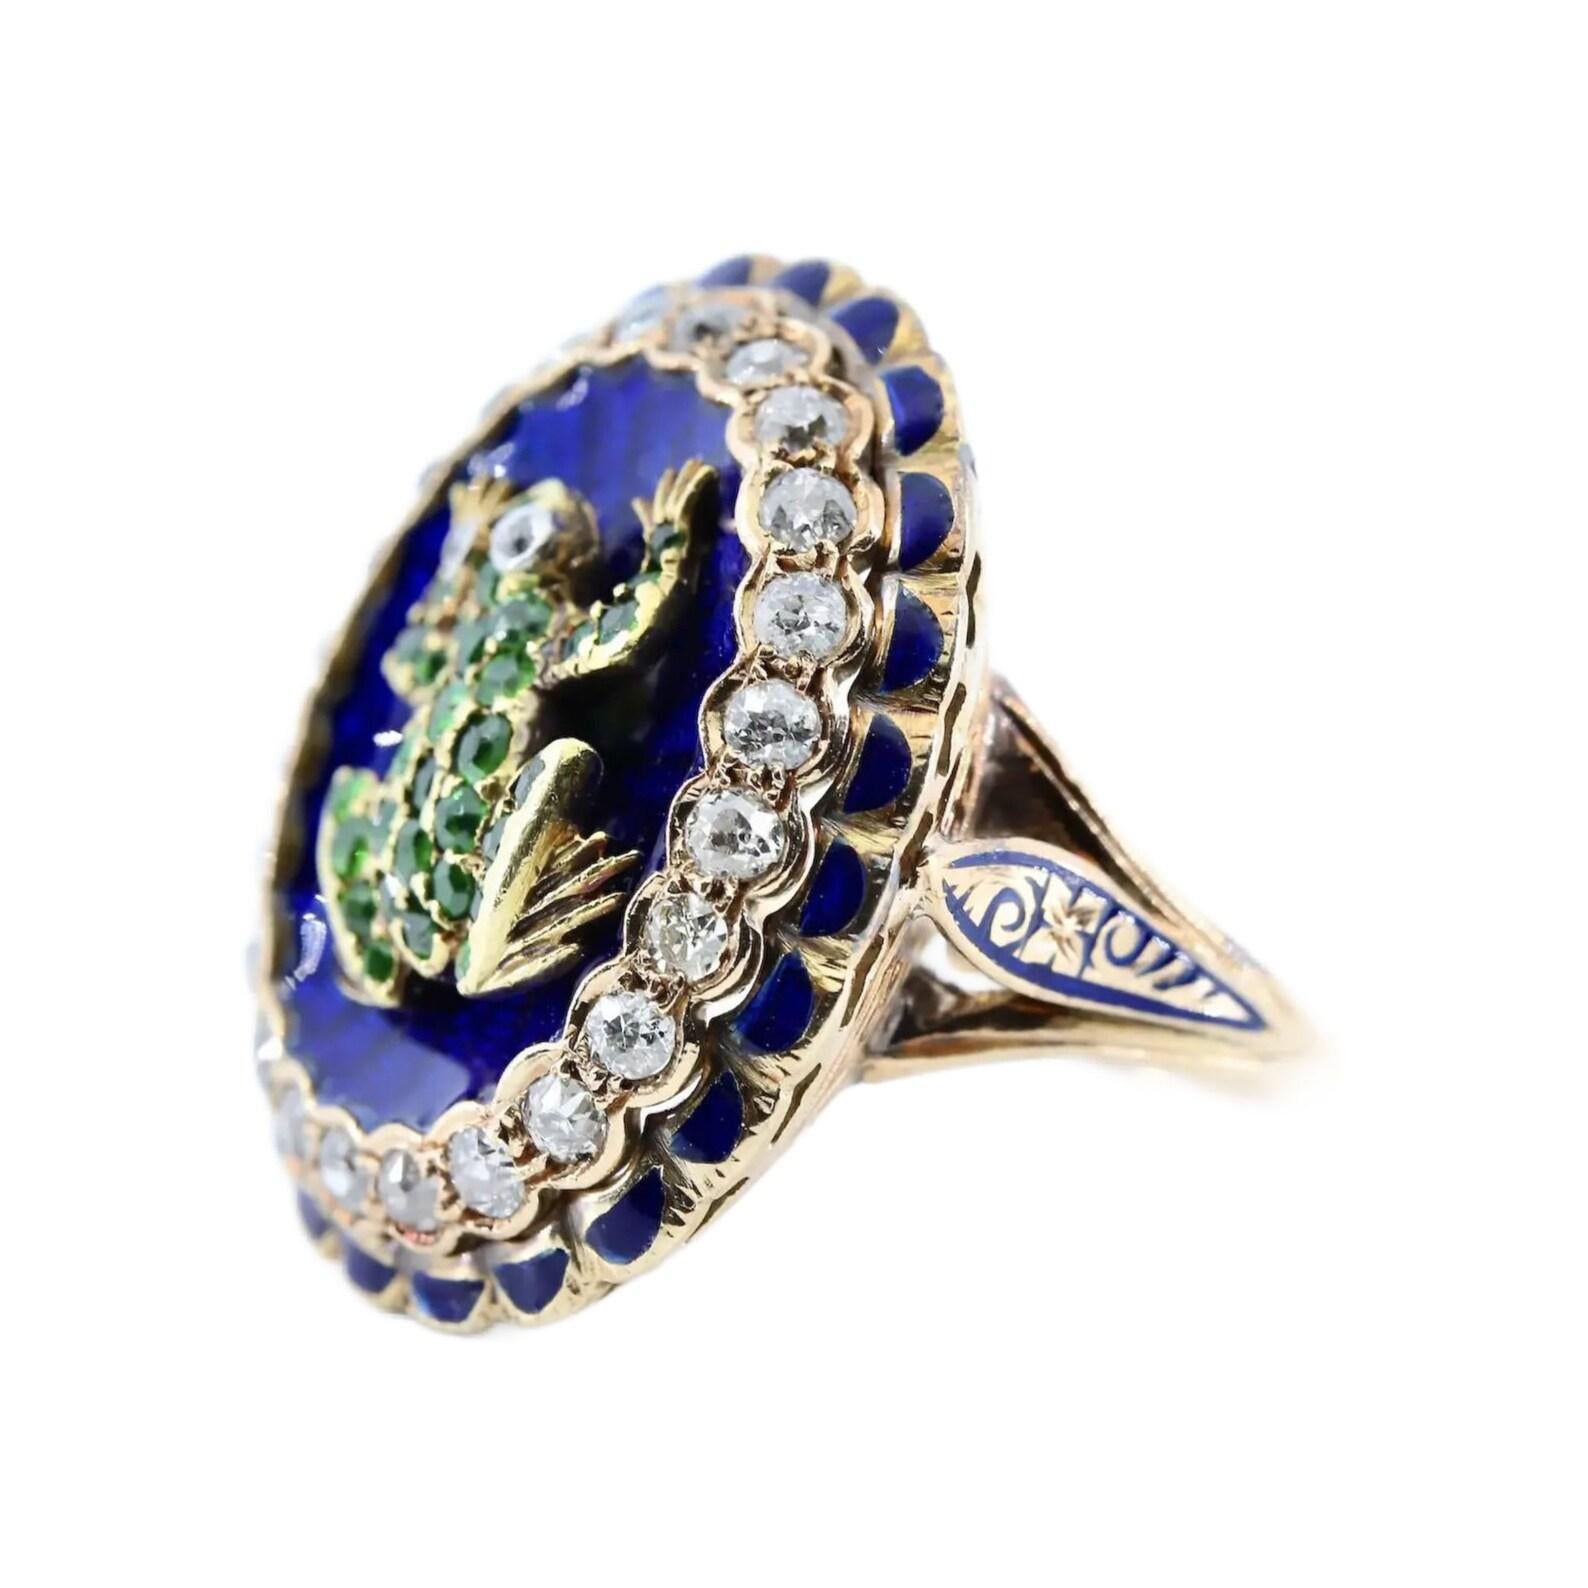 Old Mine Cut Victorian Frog Motif Demantoid Garnet, Diamond, & Blue Enamel Ring For Sale